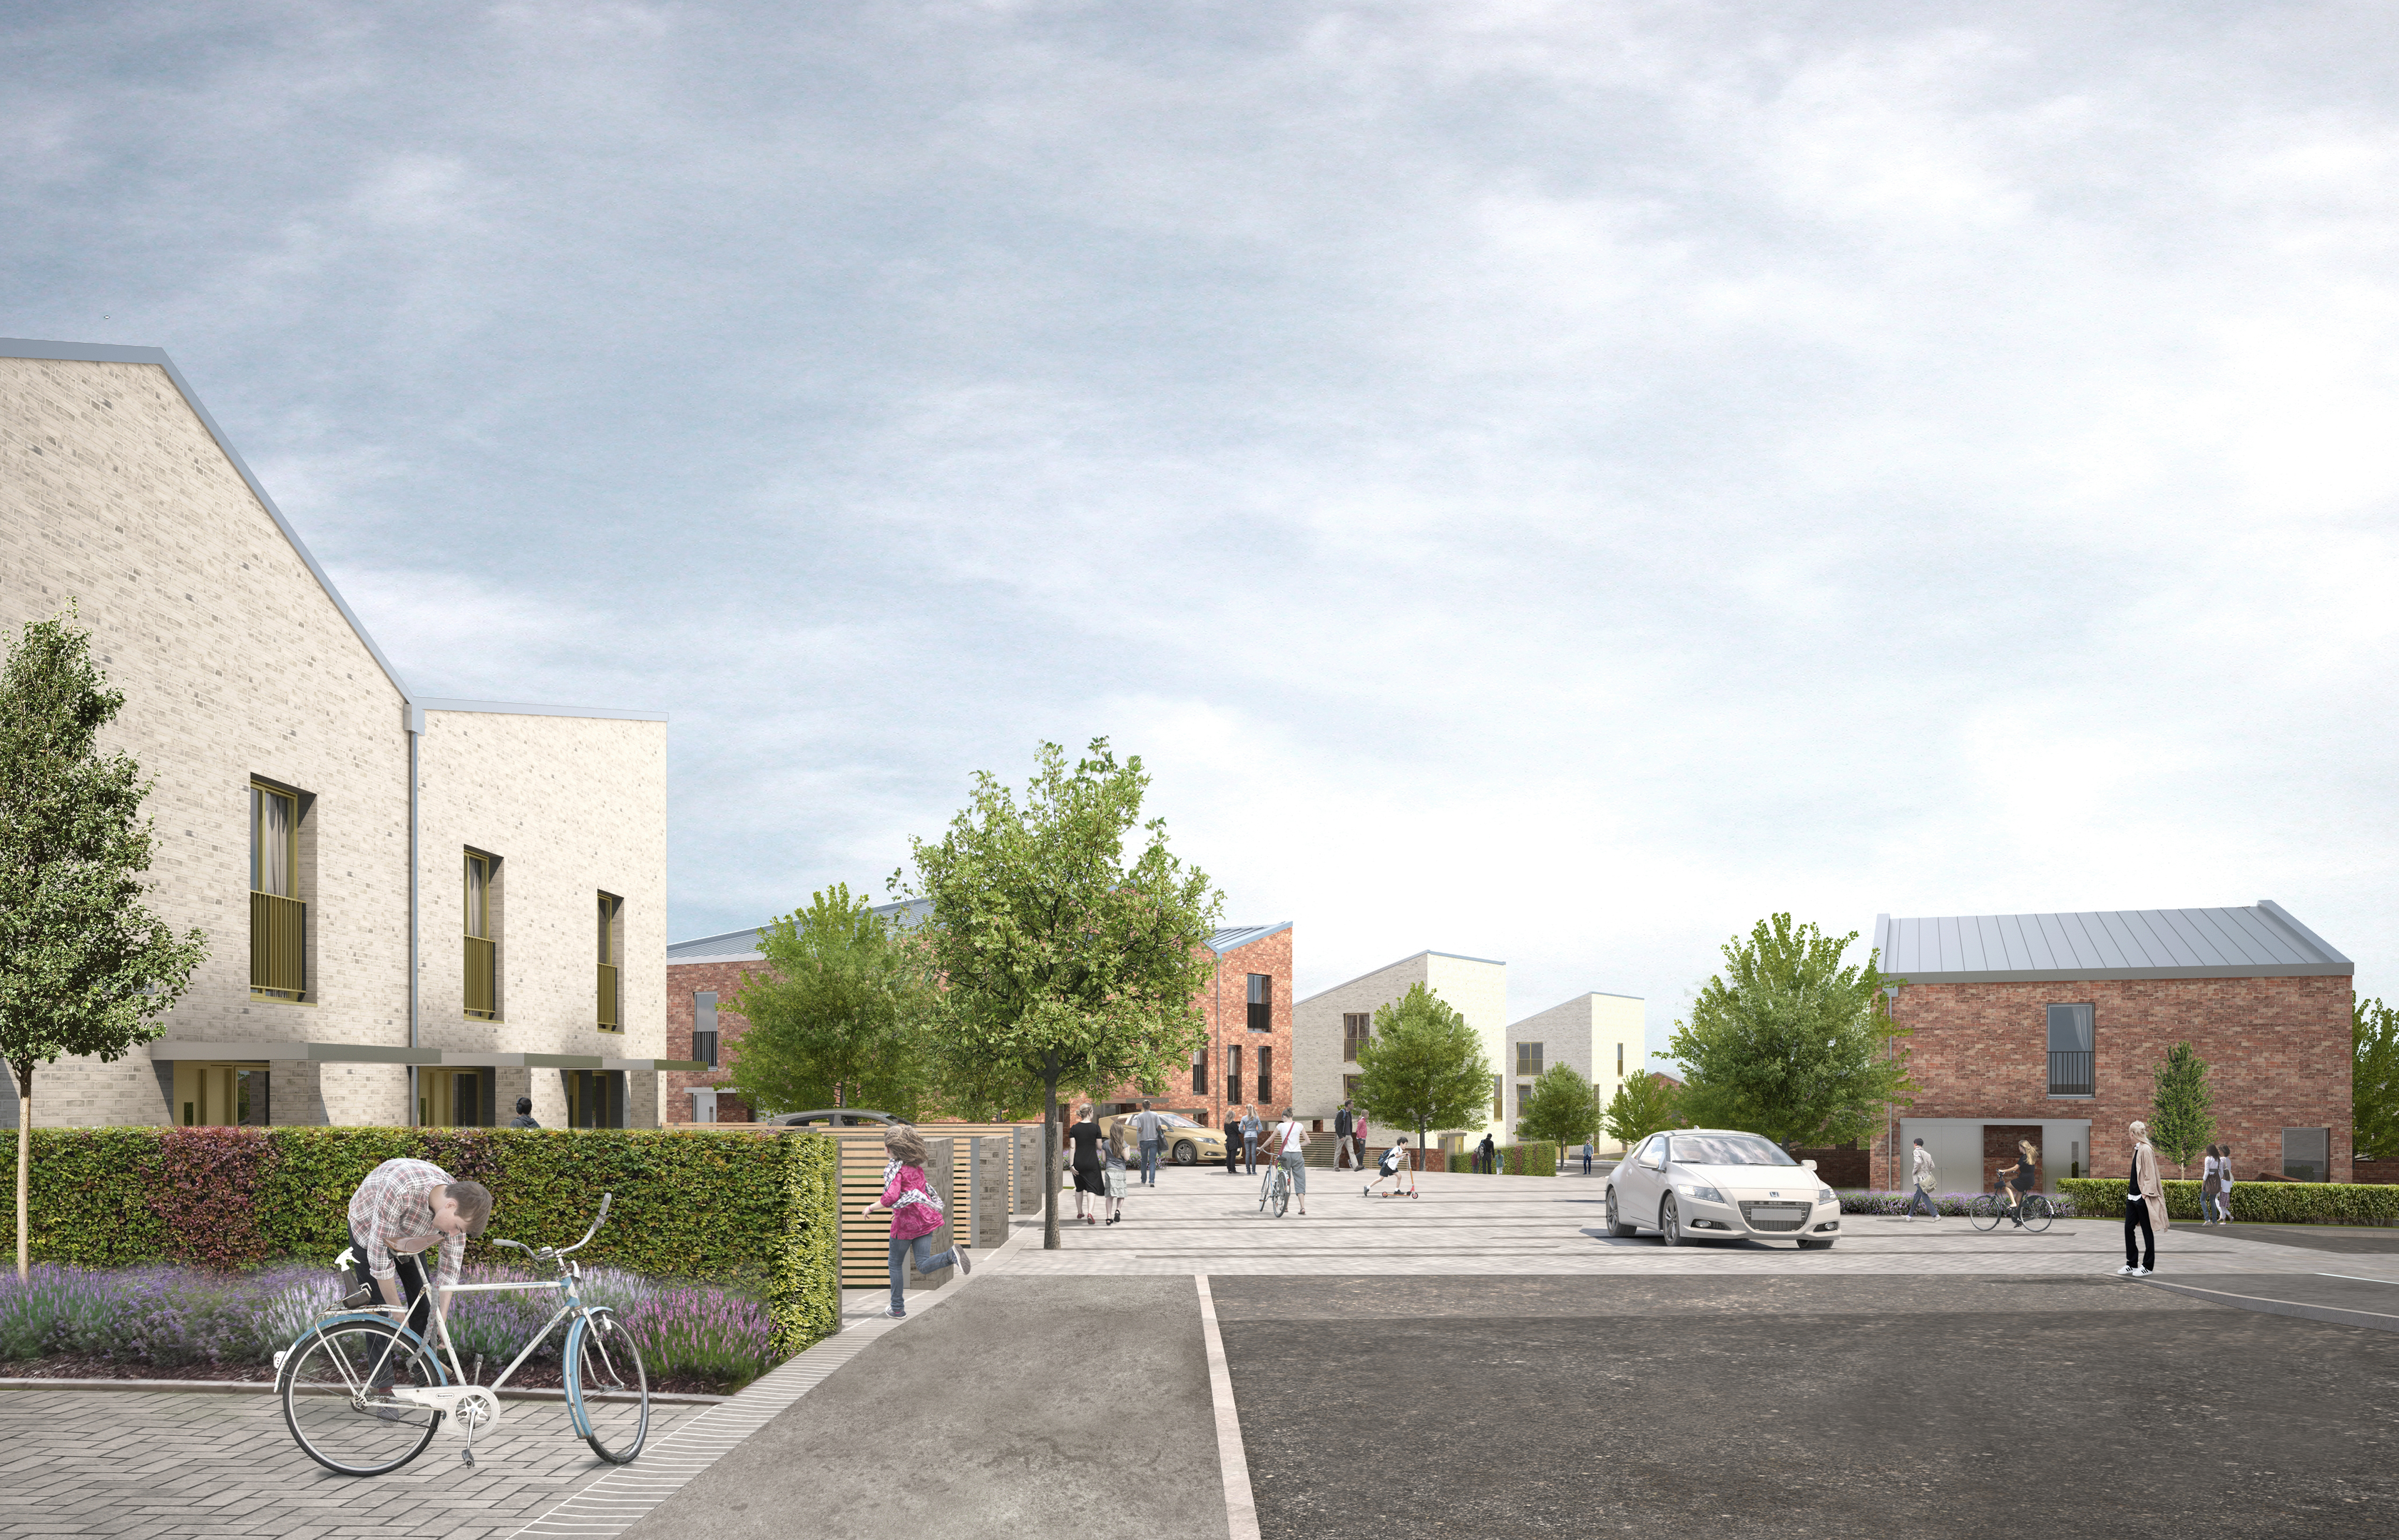 The £26 million Fraser Avenue masterplan vision